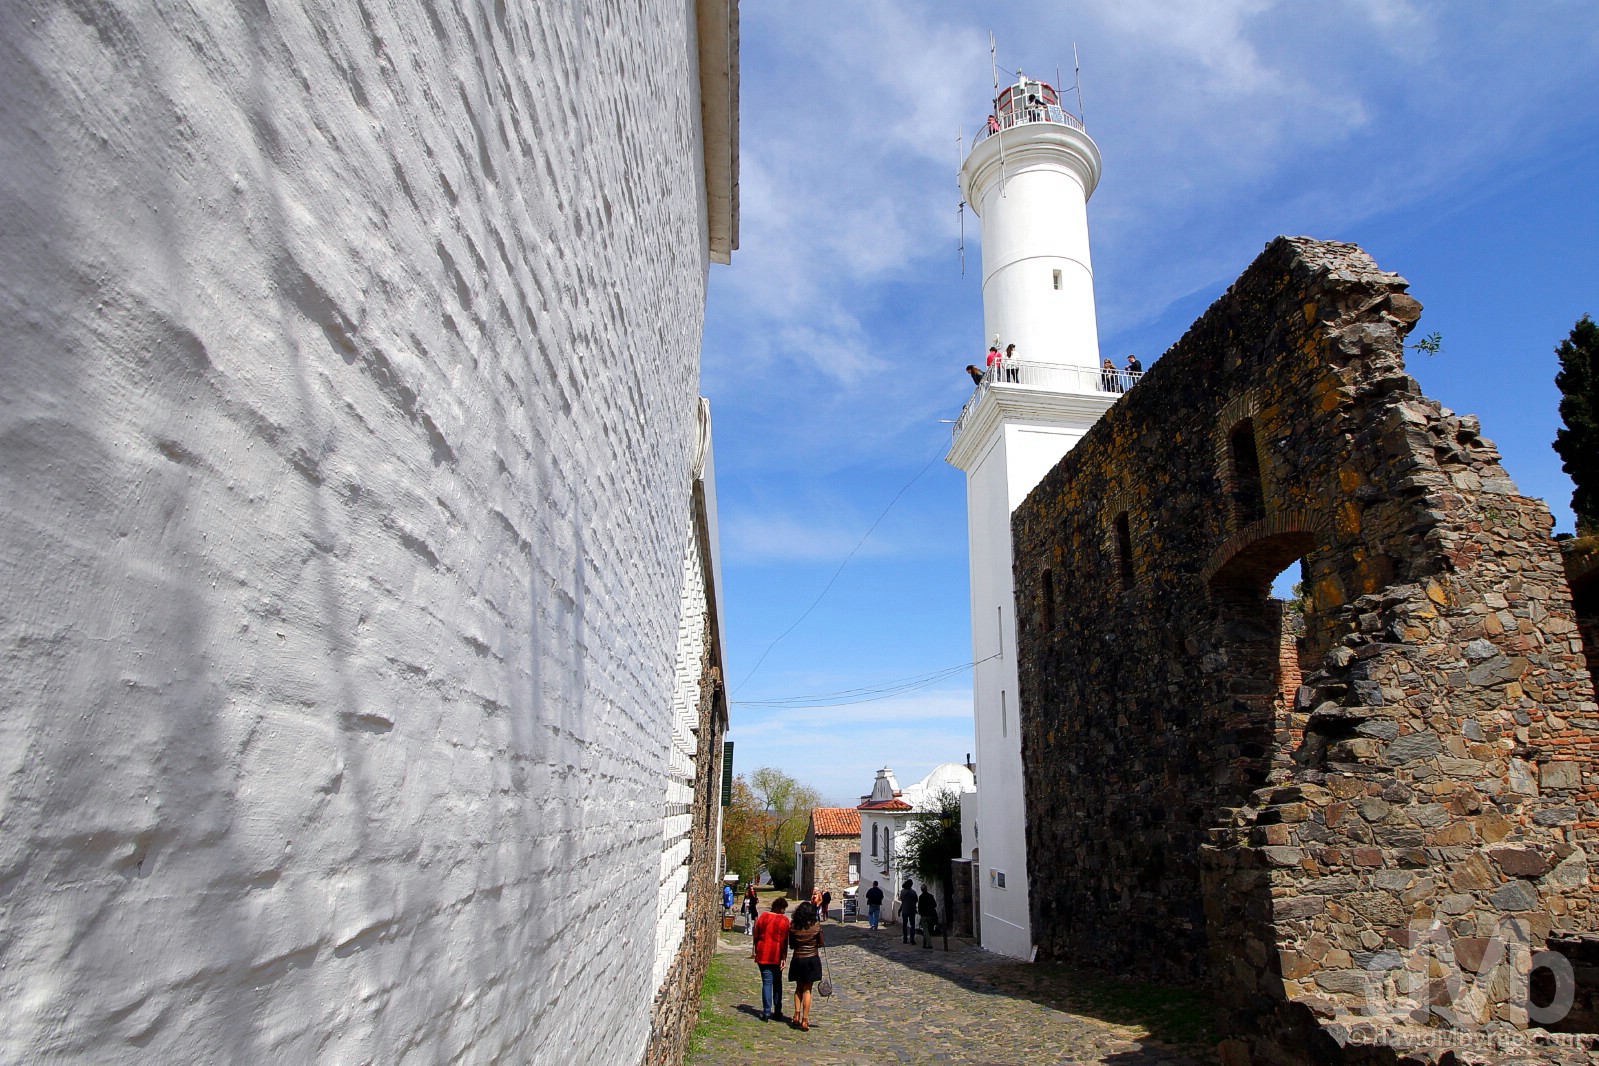 Colonia del Sacramento Lighthouse as seen from de San Francisco, Colonia del Sacramento, Uruguay. September 20, 2015.